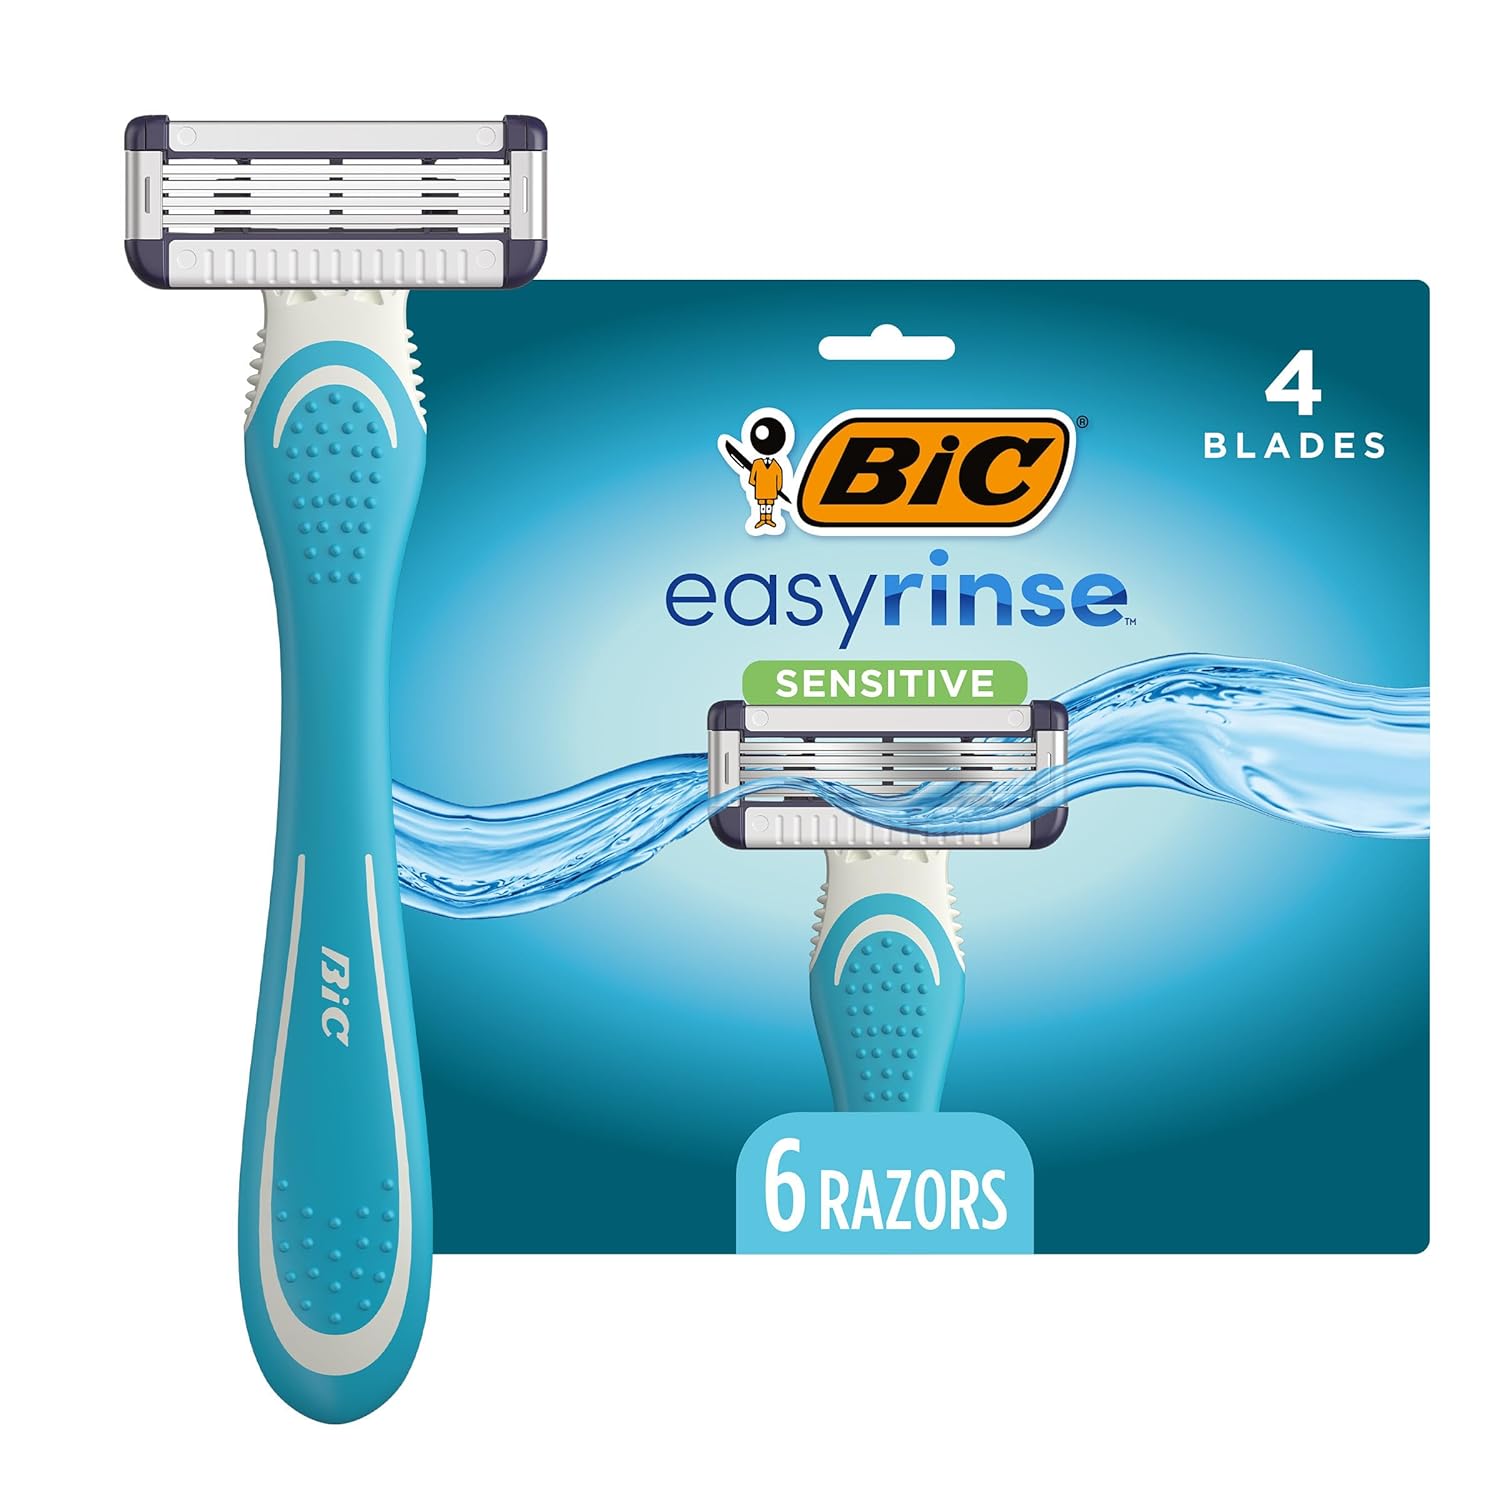 BIC EasyRinse Sensitive Anti-Clogging Men' Disposable Razors, Clinically Proven for Sensitive Skin, Shaving Razors With 4 Blades, 6 Count